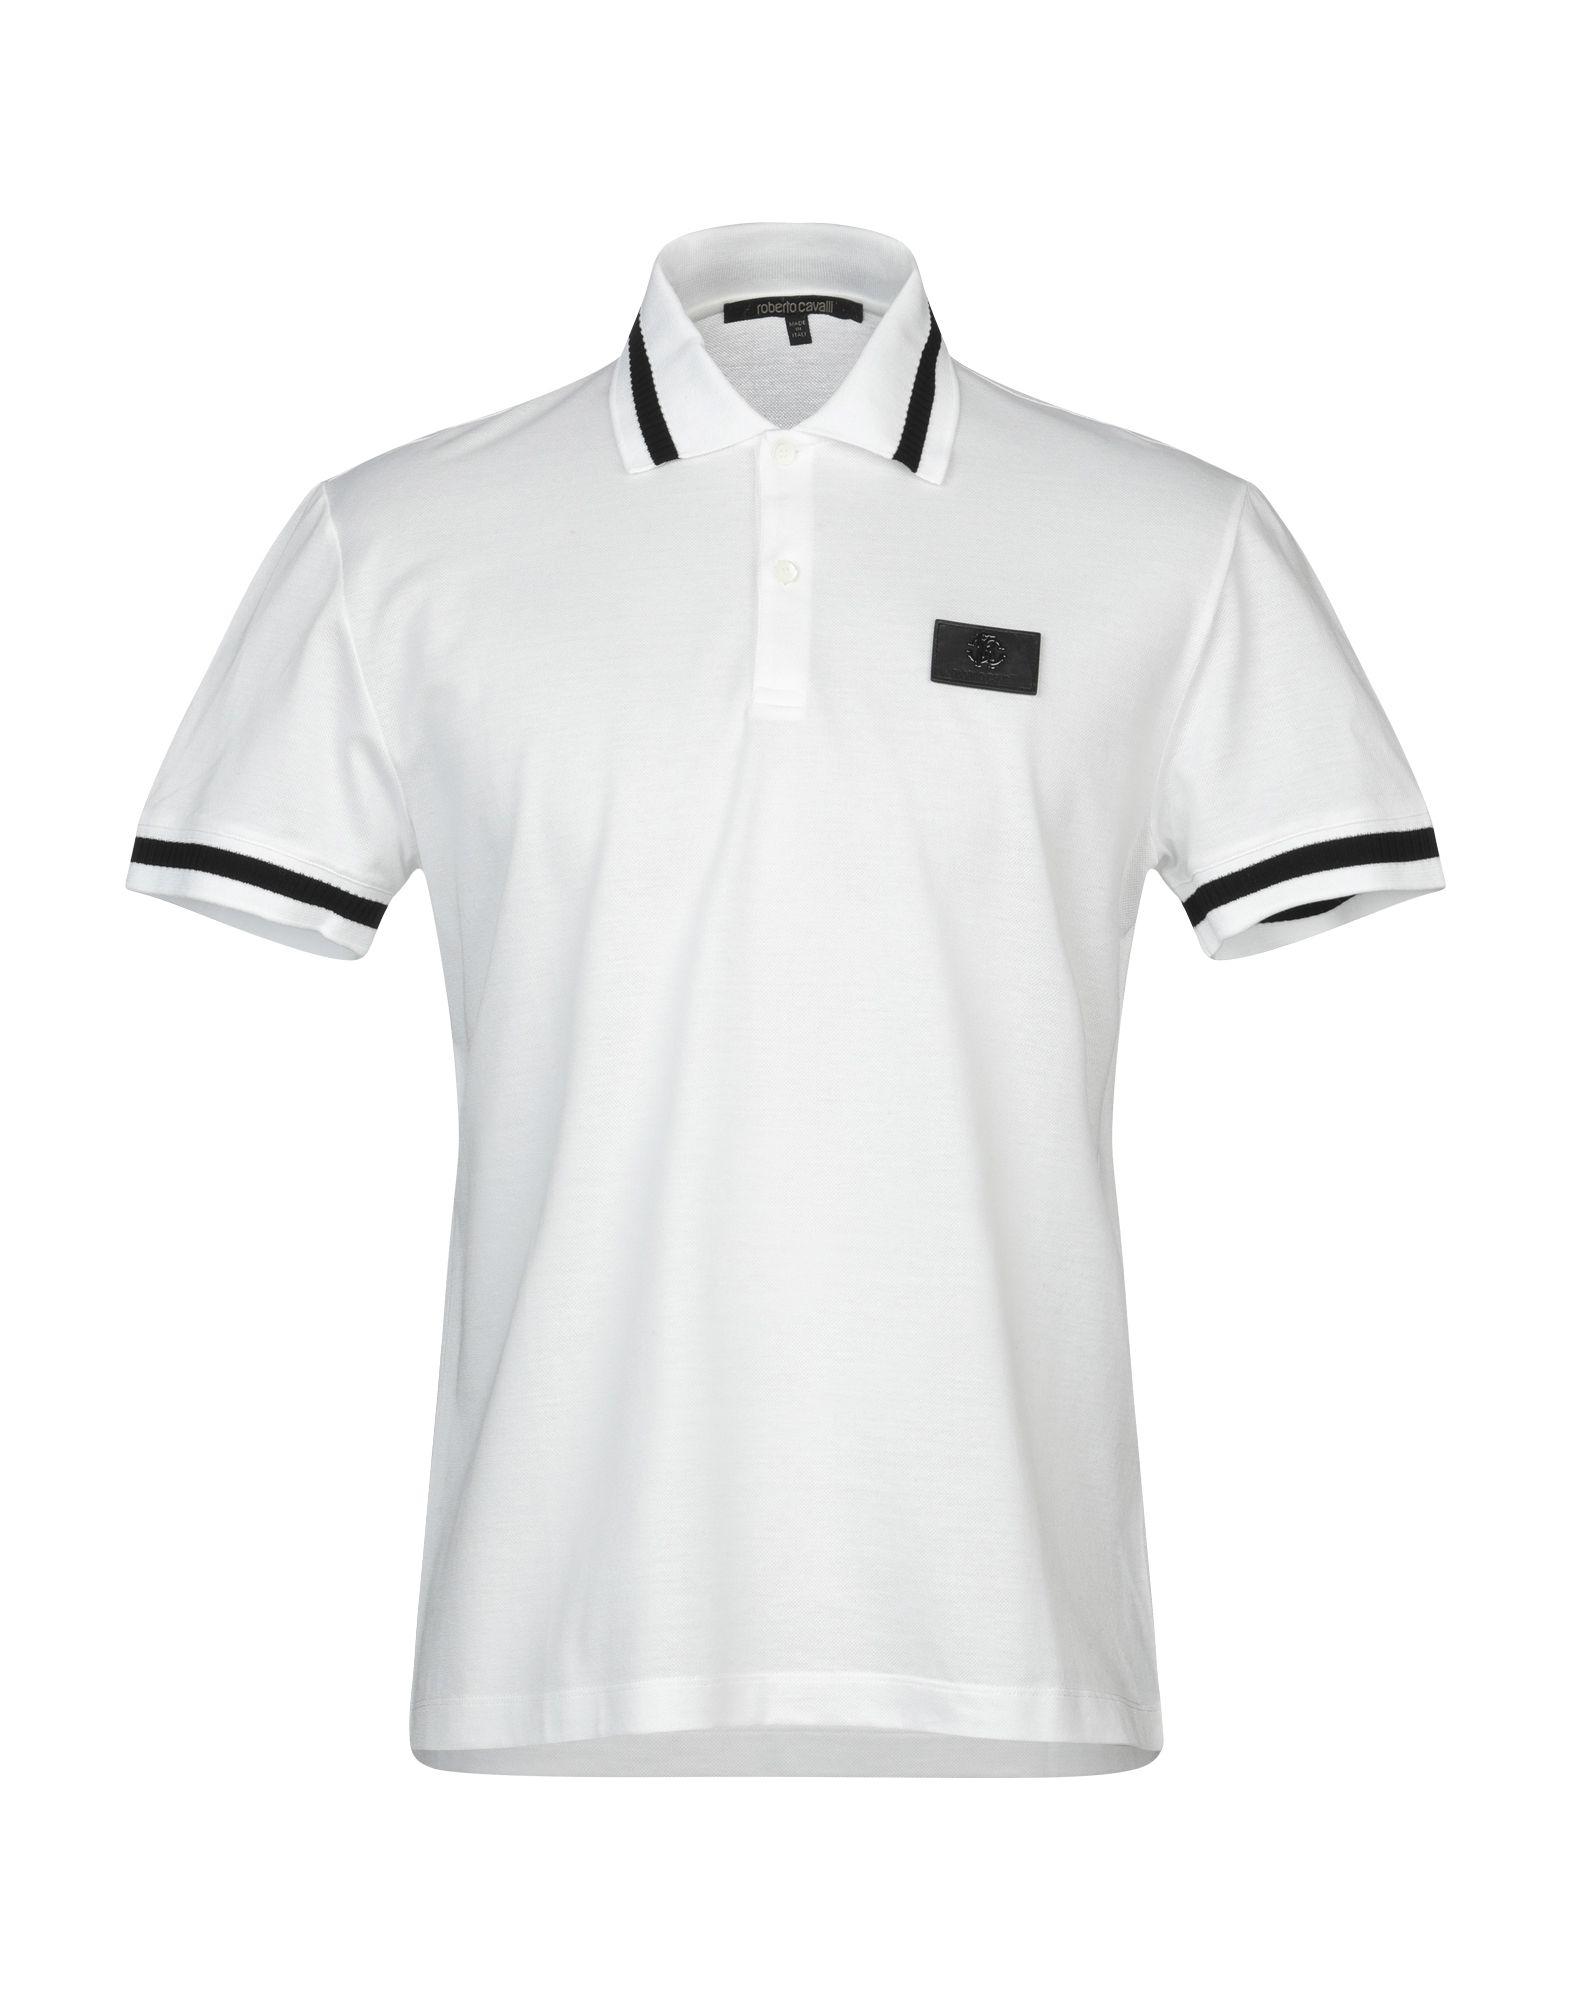 Roberto Cavalli Cotton Polo Shirt in White for Men - Lyst